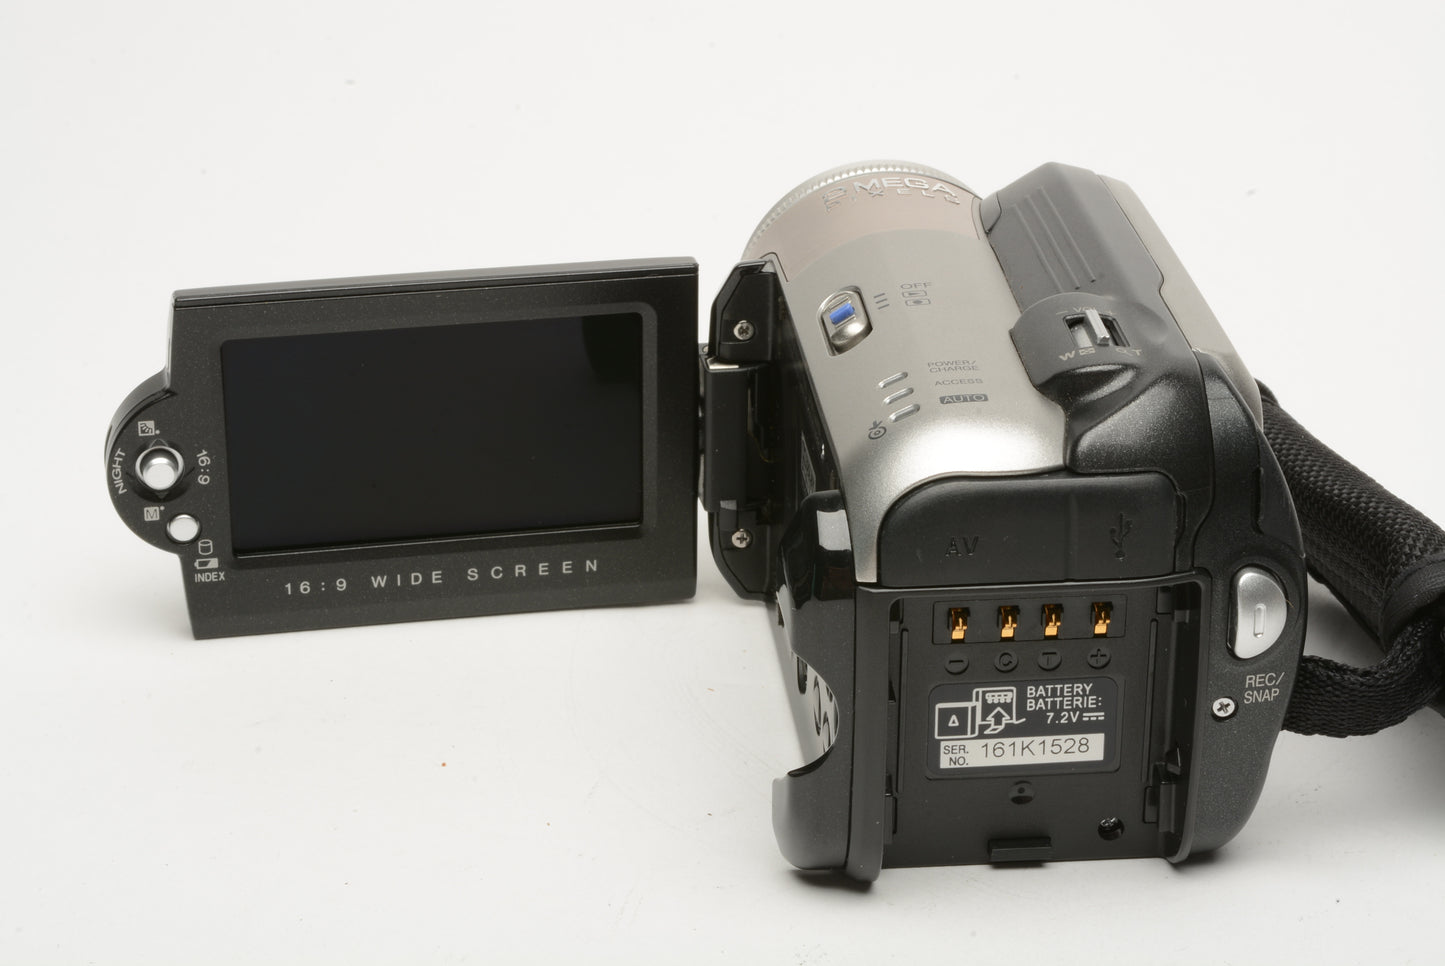 JVC Everio GZ-MG77U 30GB digital hard drive HDD Camcorder, batt+charger+manuals